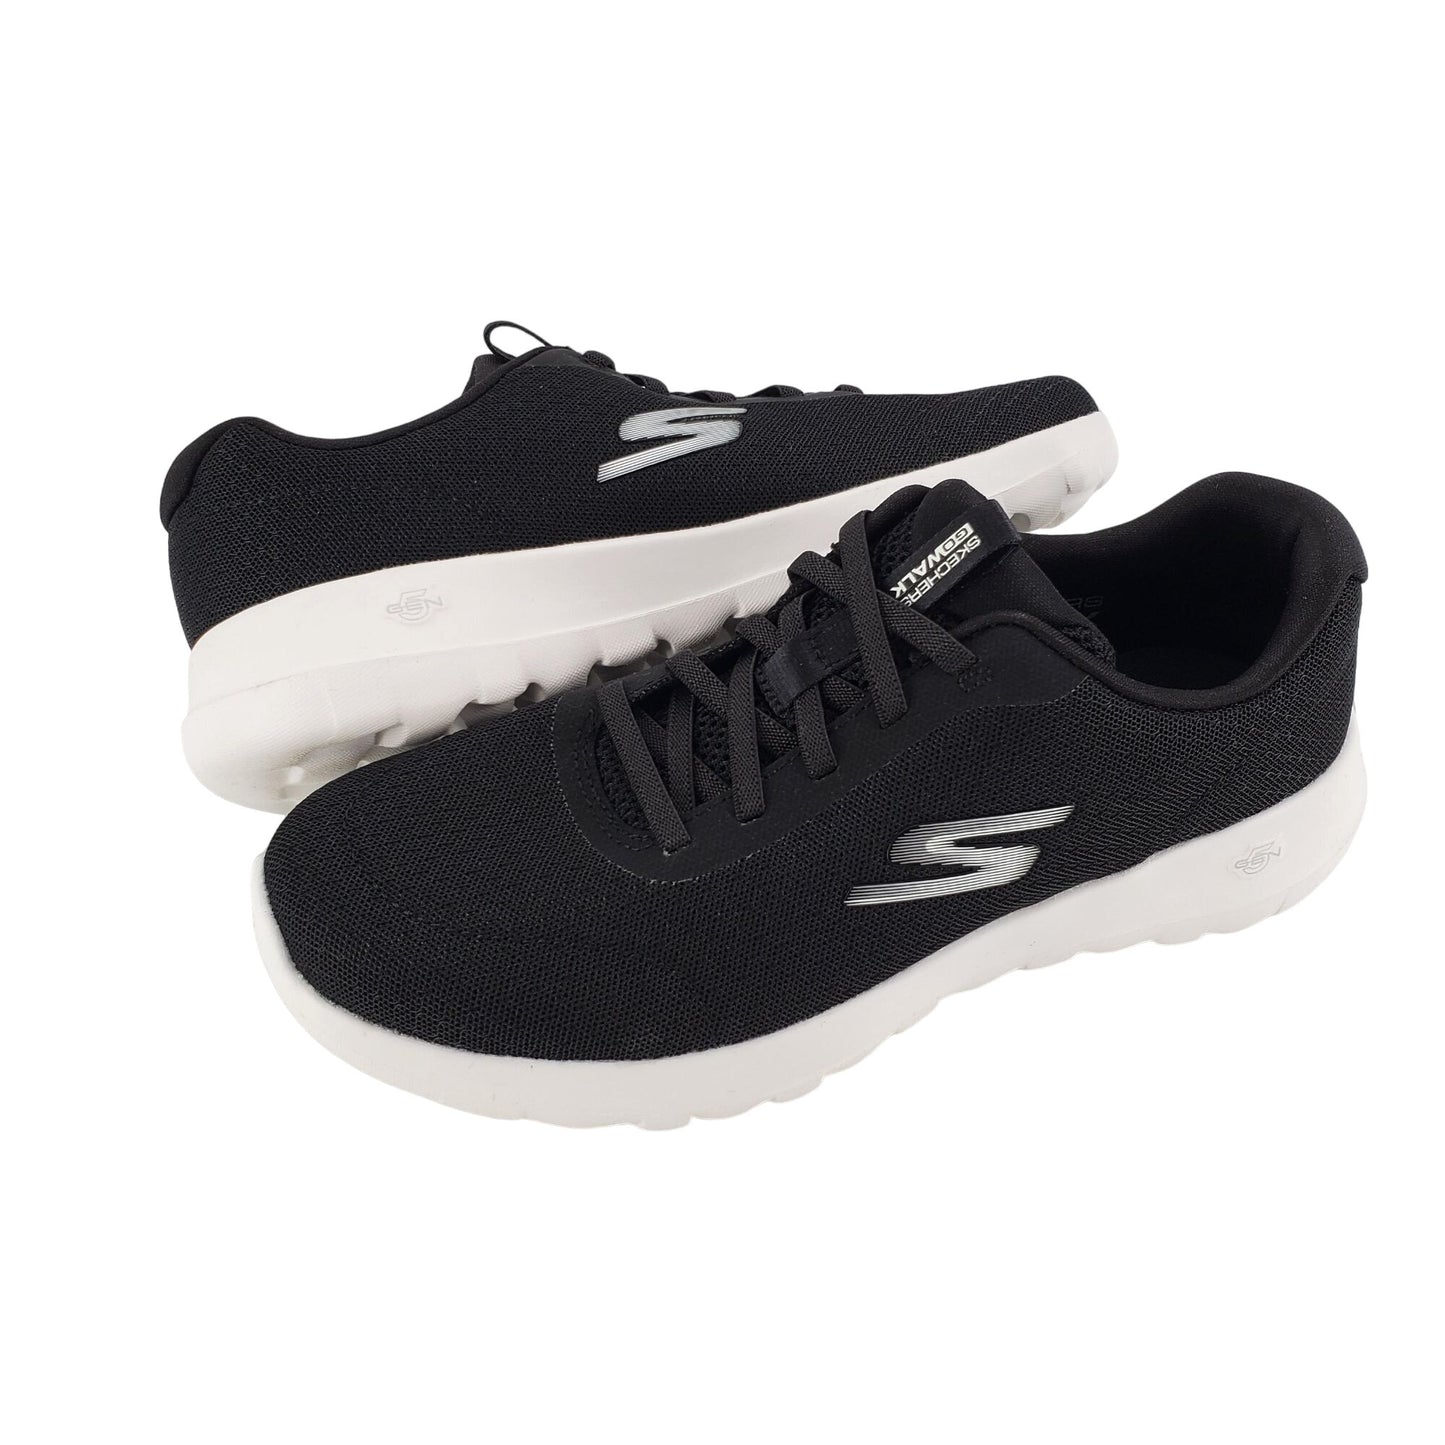 SKECHERS Performance Sneakers Go Walk Joy 5th Gen Womans Athletic Slip on Activewear Shoe